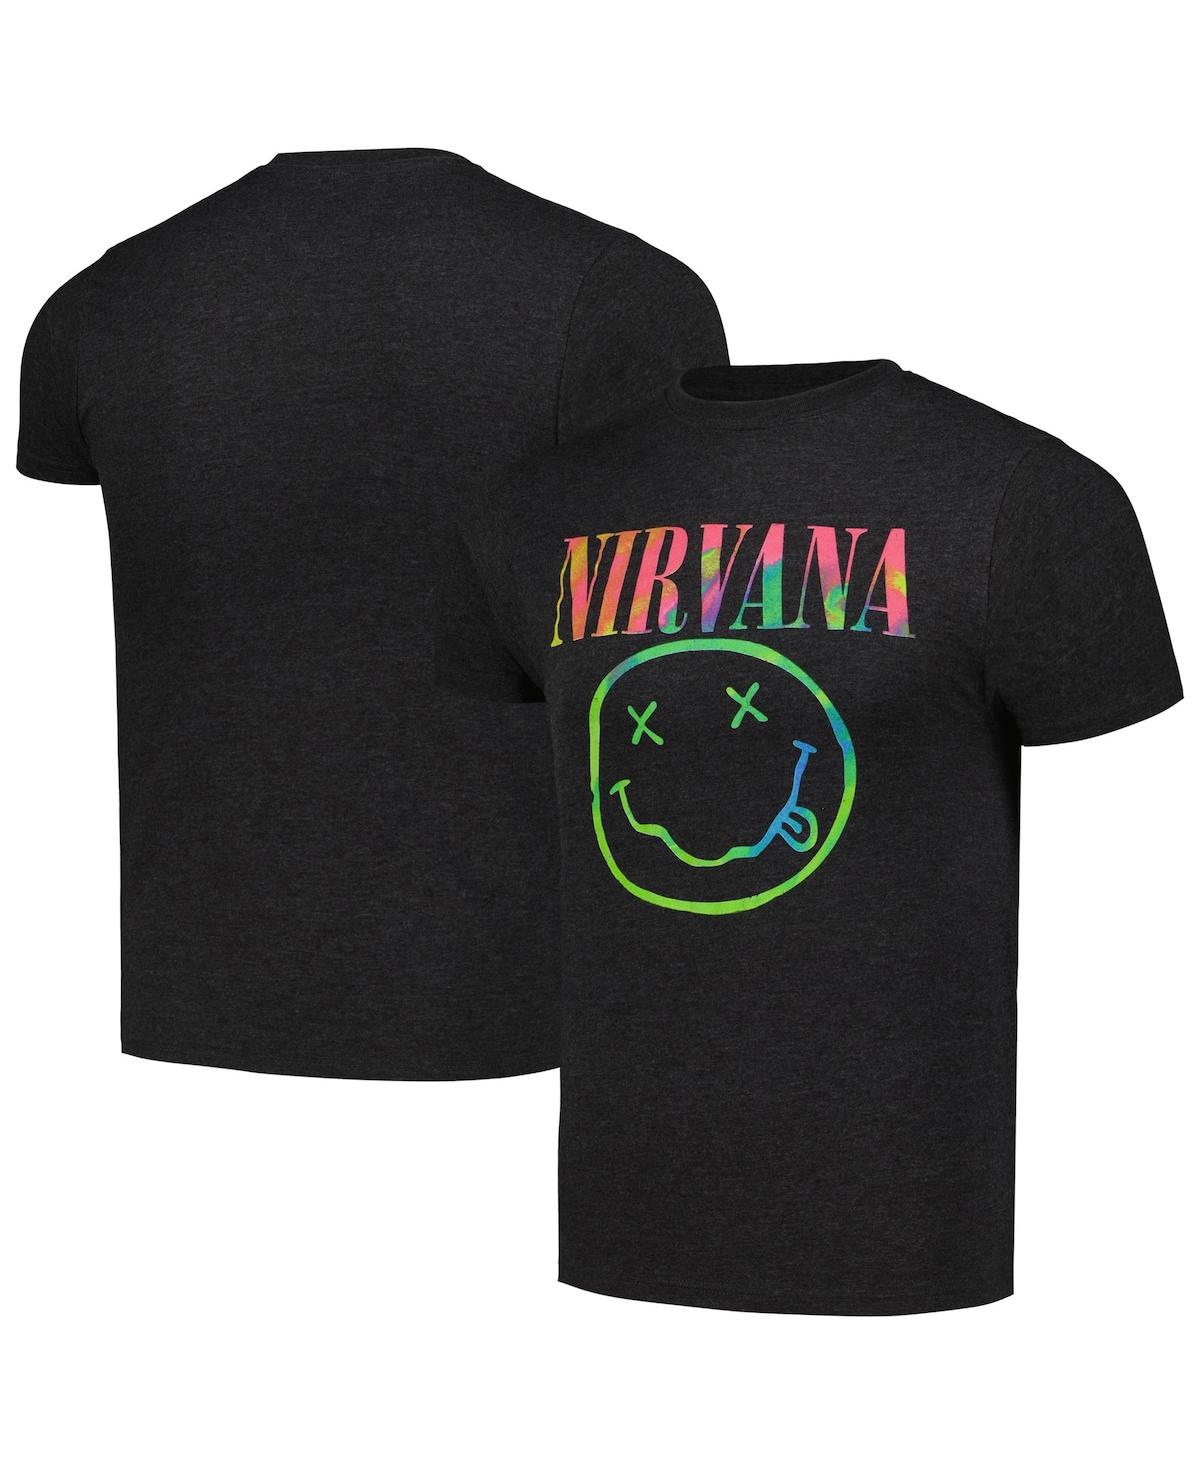 Men's and Women's Black Distressed Nirvana Smile Logo T-shirt - Black